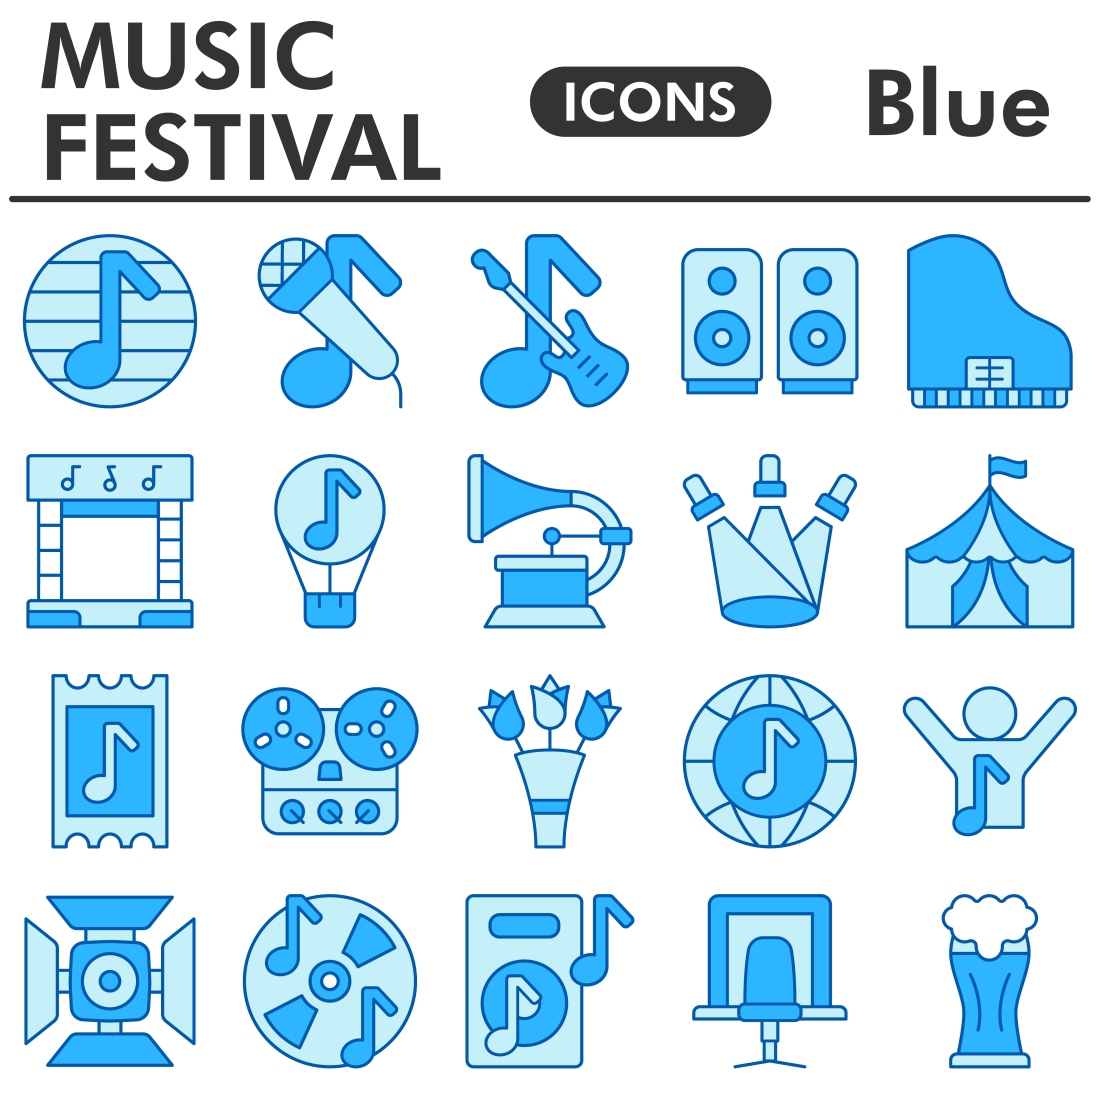 Muzic festival icons set, blue style cover image.